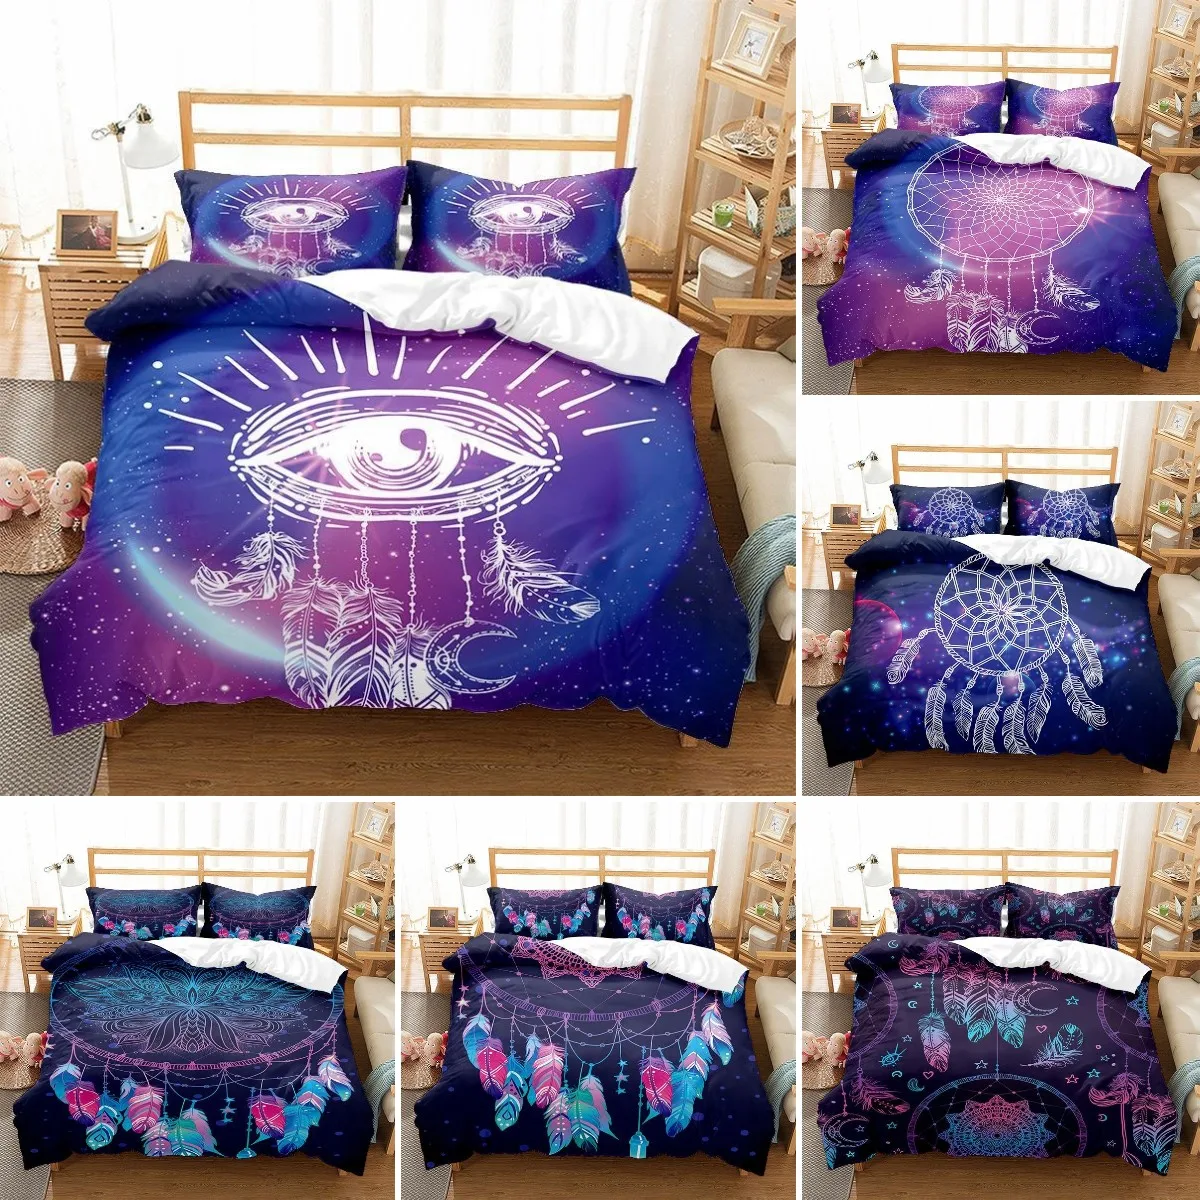 

Galaxy Dreamcatcher Bedding Set,Eye Feathers Pattern Duvet Cover, Boho Tribal Ethnic Decorative 3 Piece Bedclothes